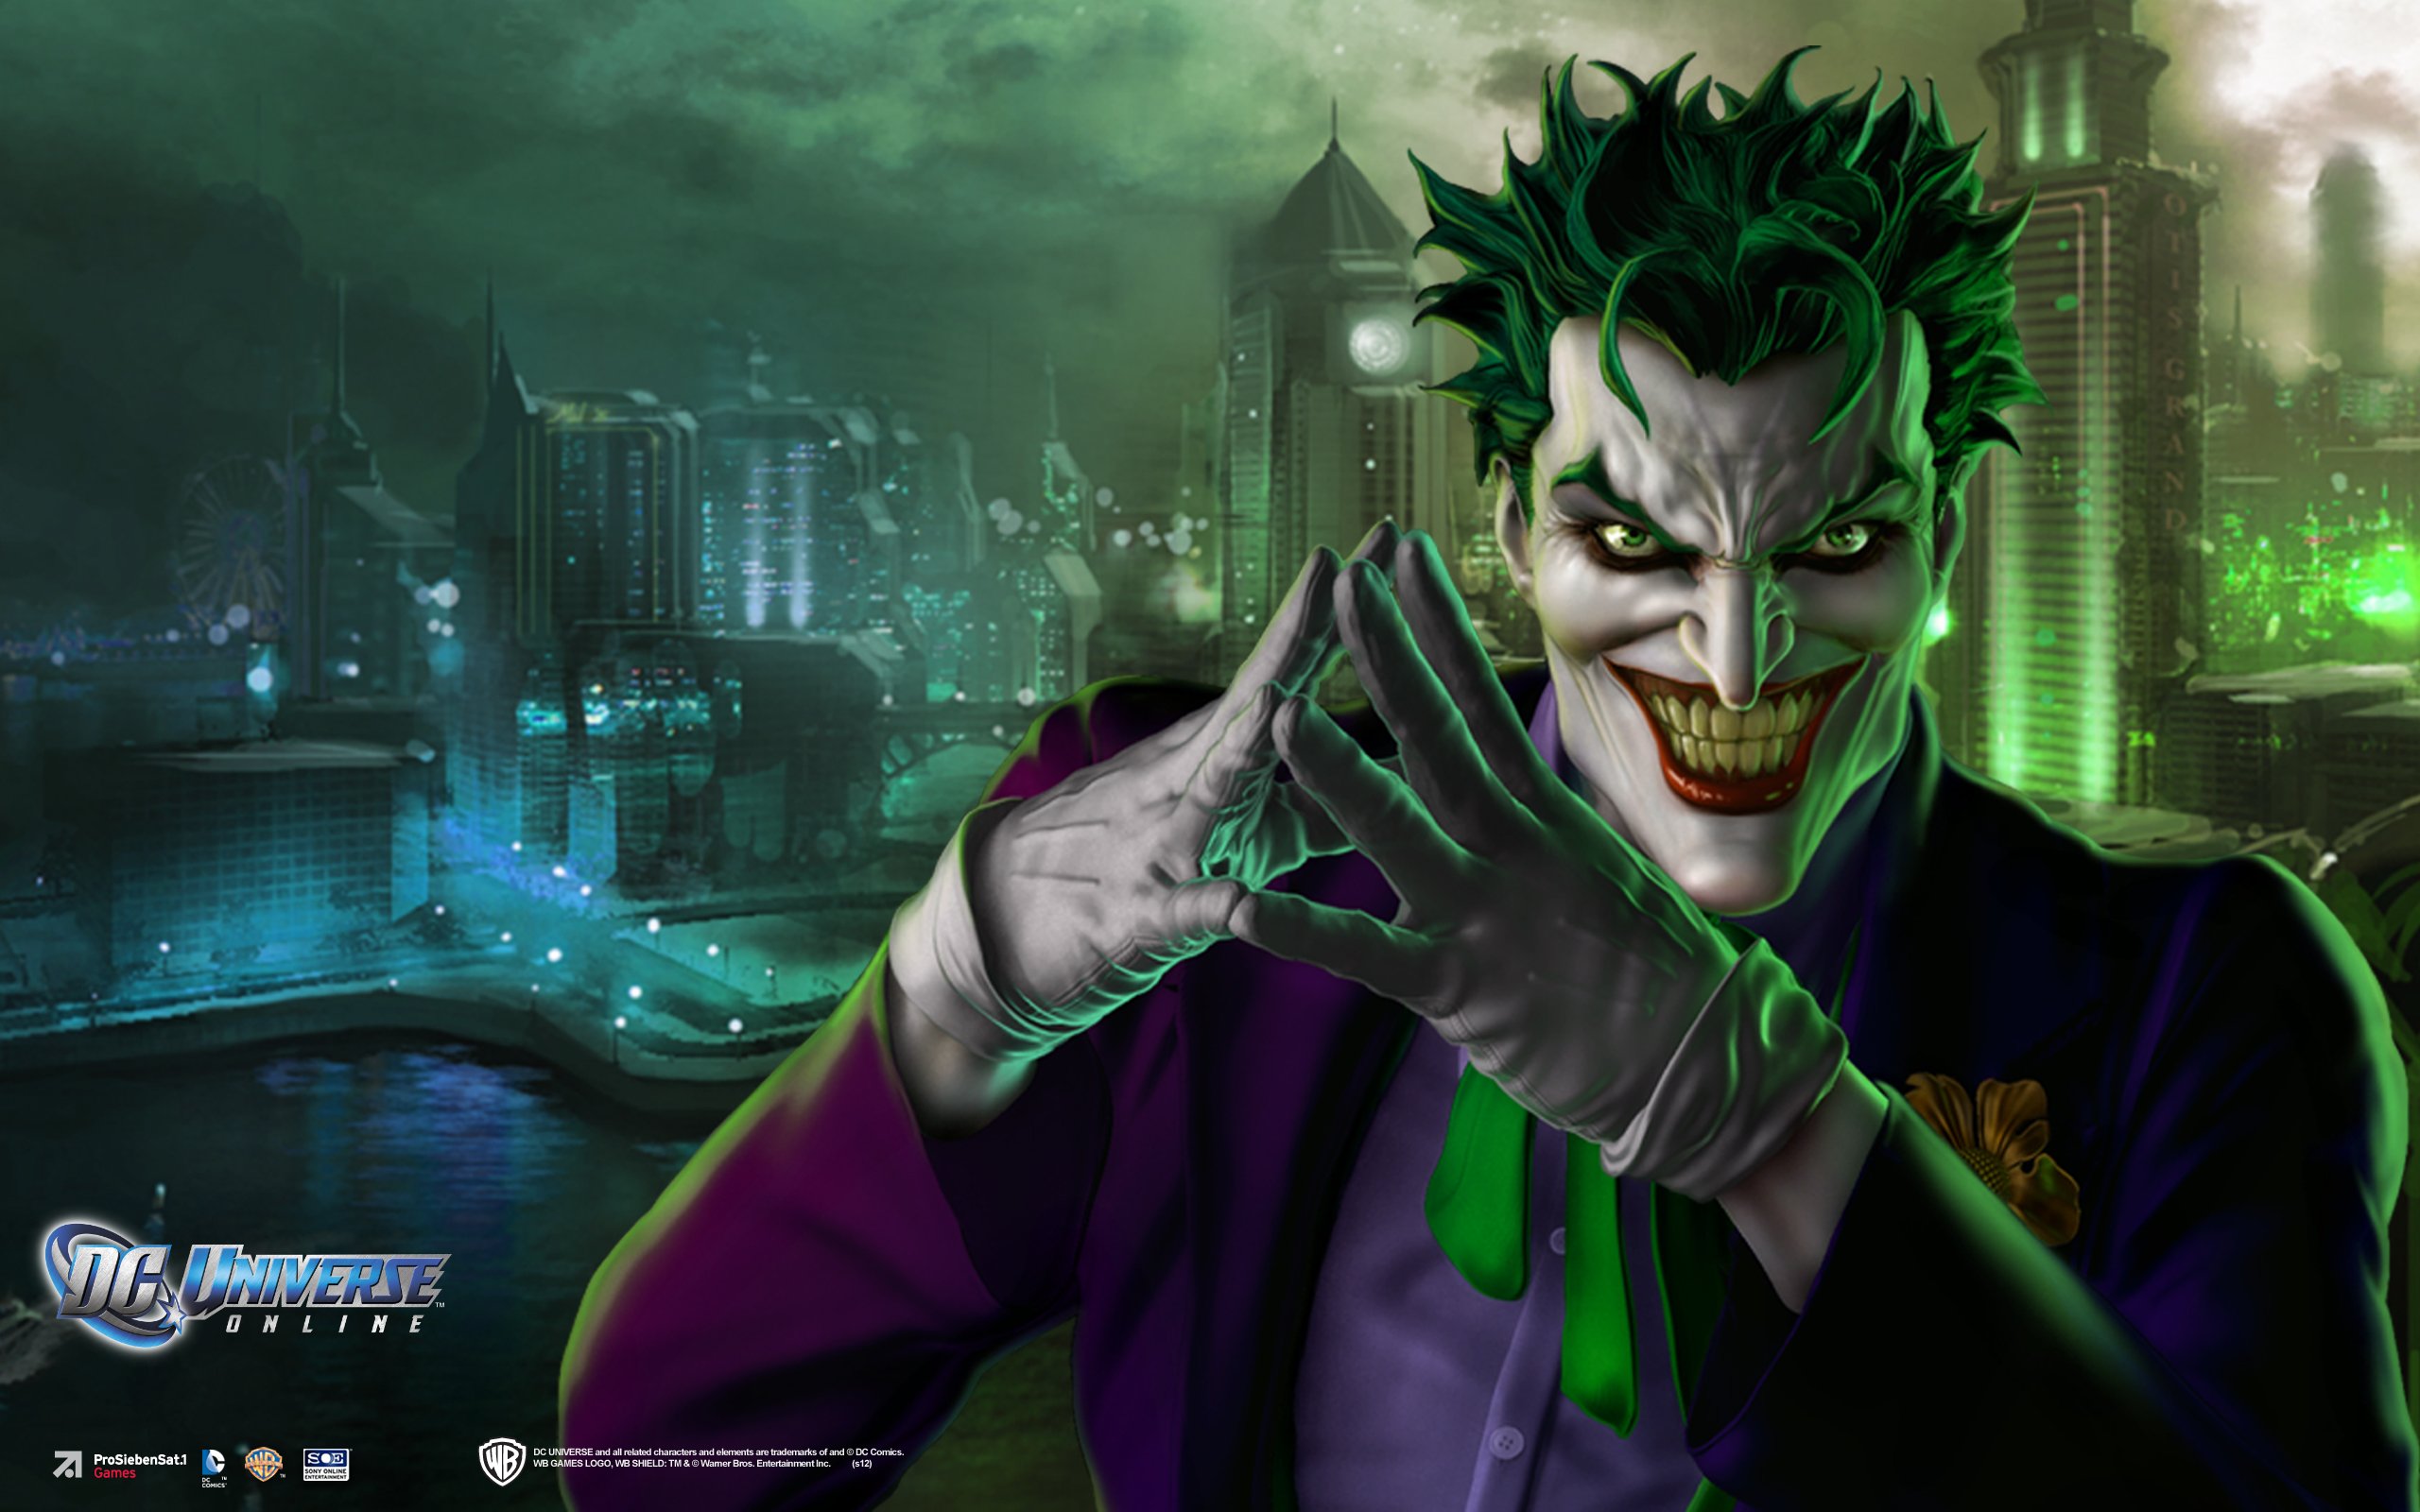 The Joker Dc Universe Online Wallpaper HD For Deskx1600, Wallpaper13.com